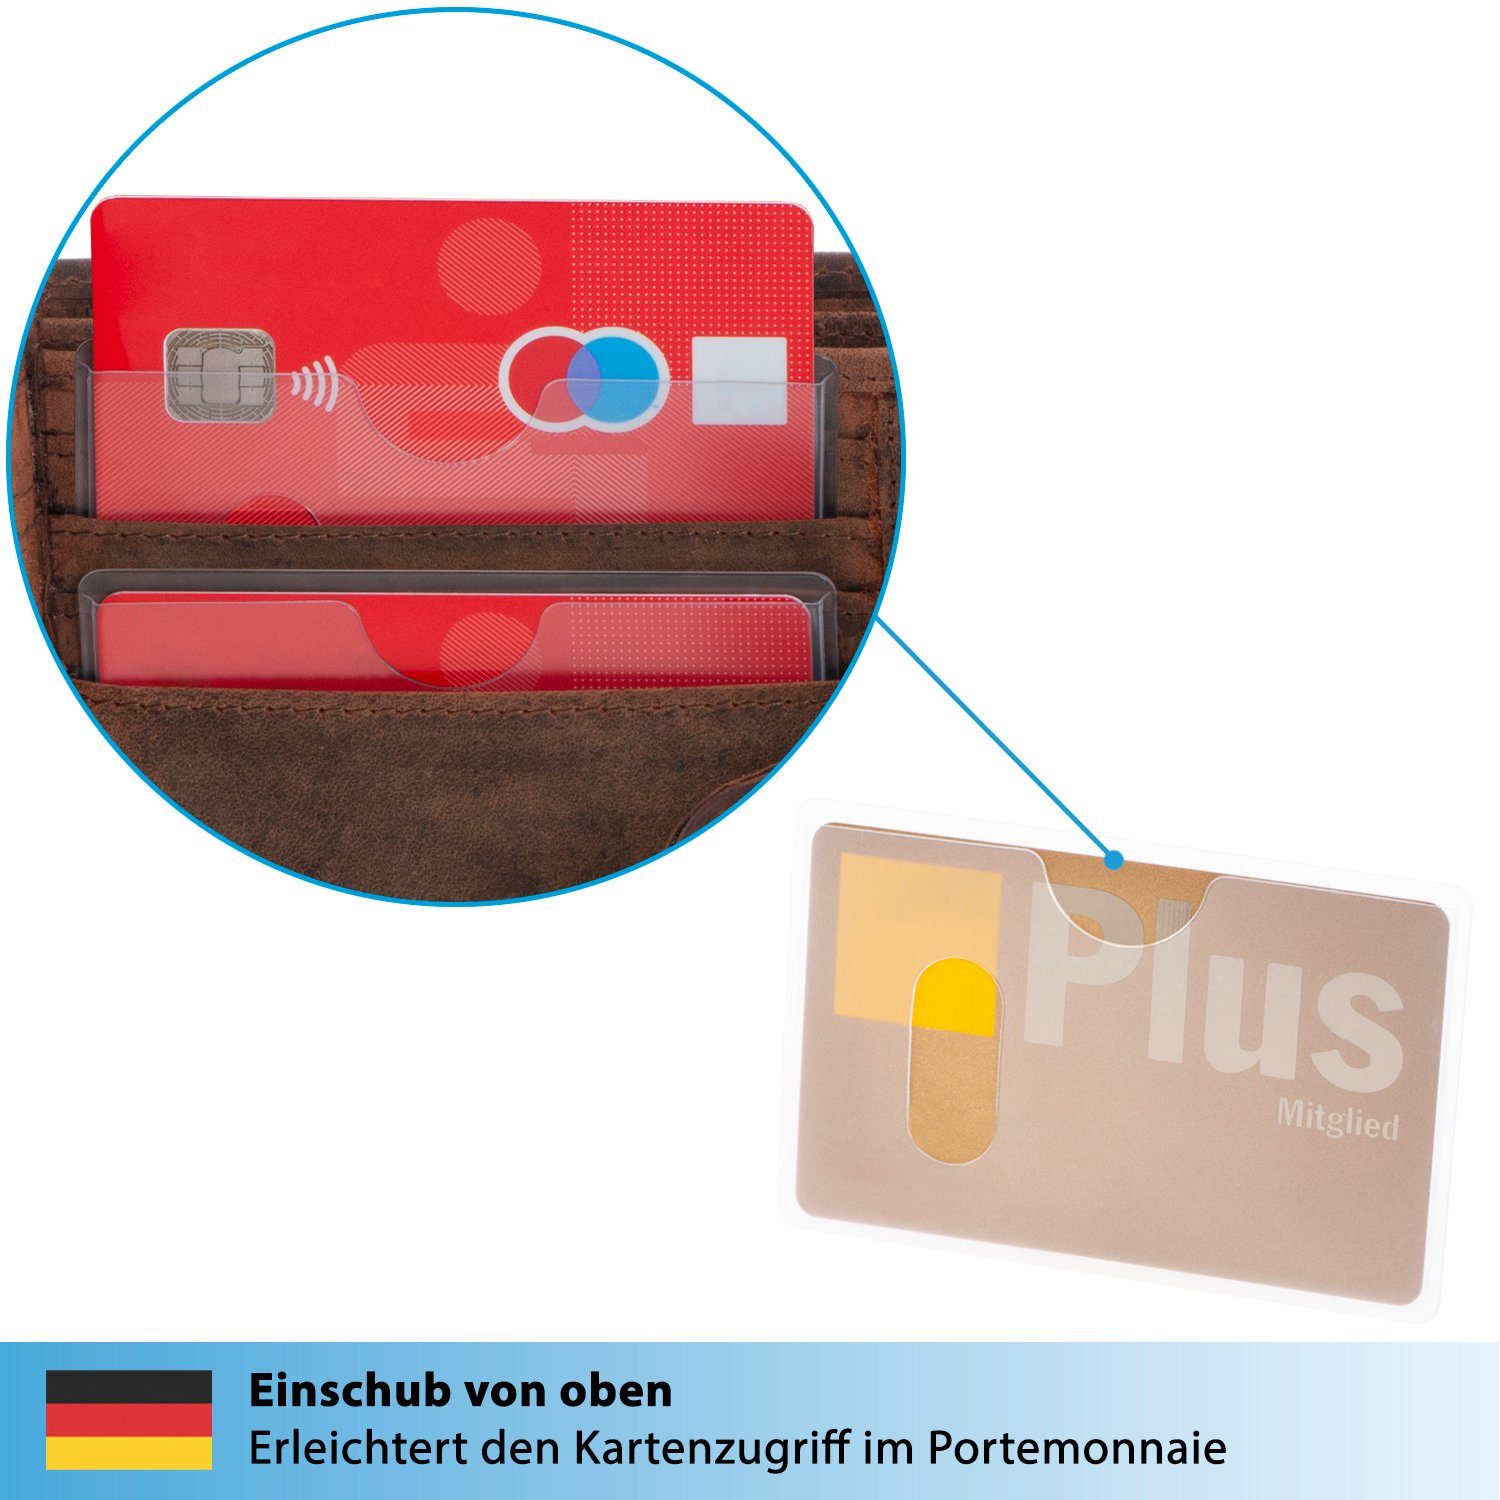 valonic Etui valonic EC 6 Schutzhülle - Längseinschub Stück mit Scheckkarte